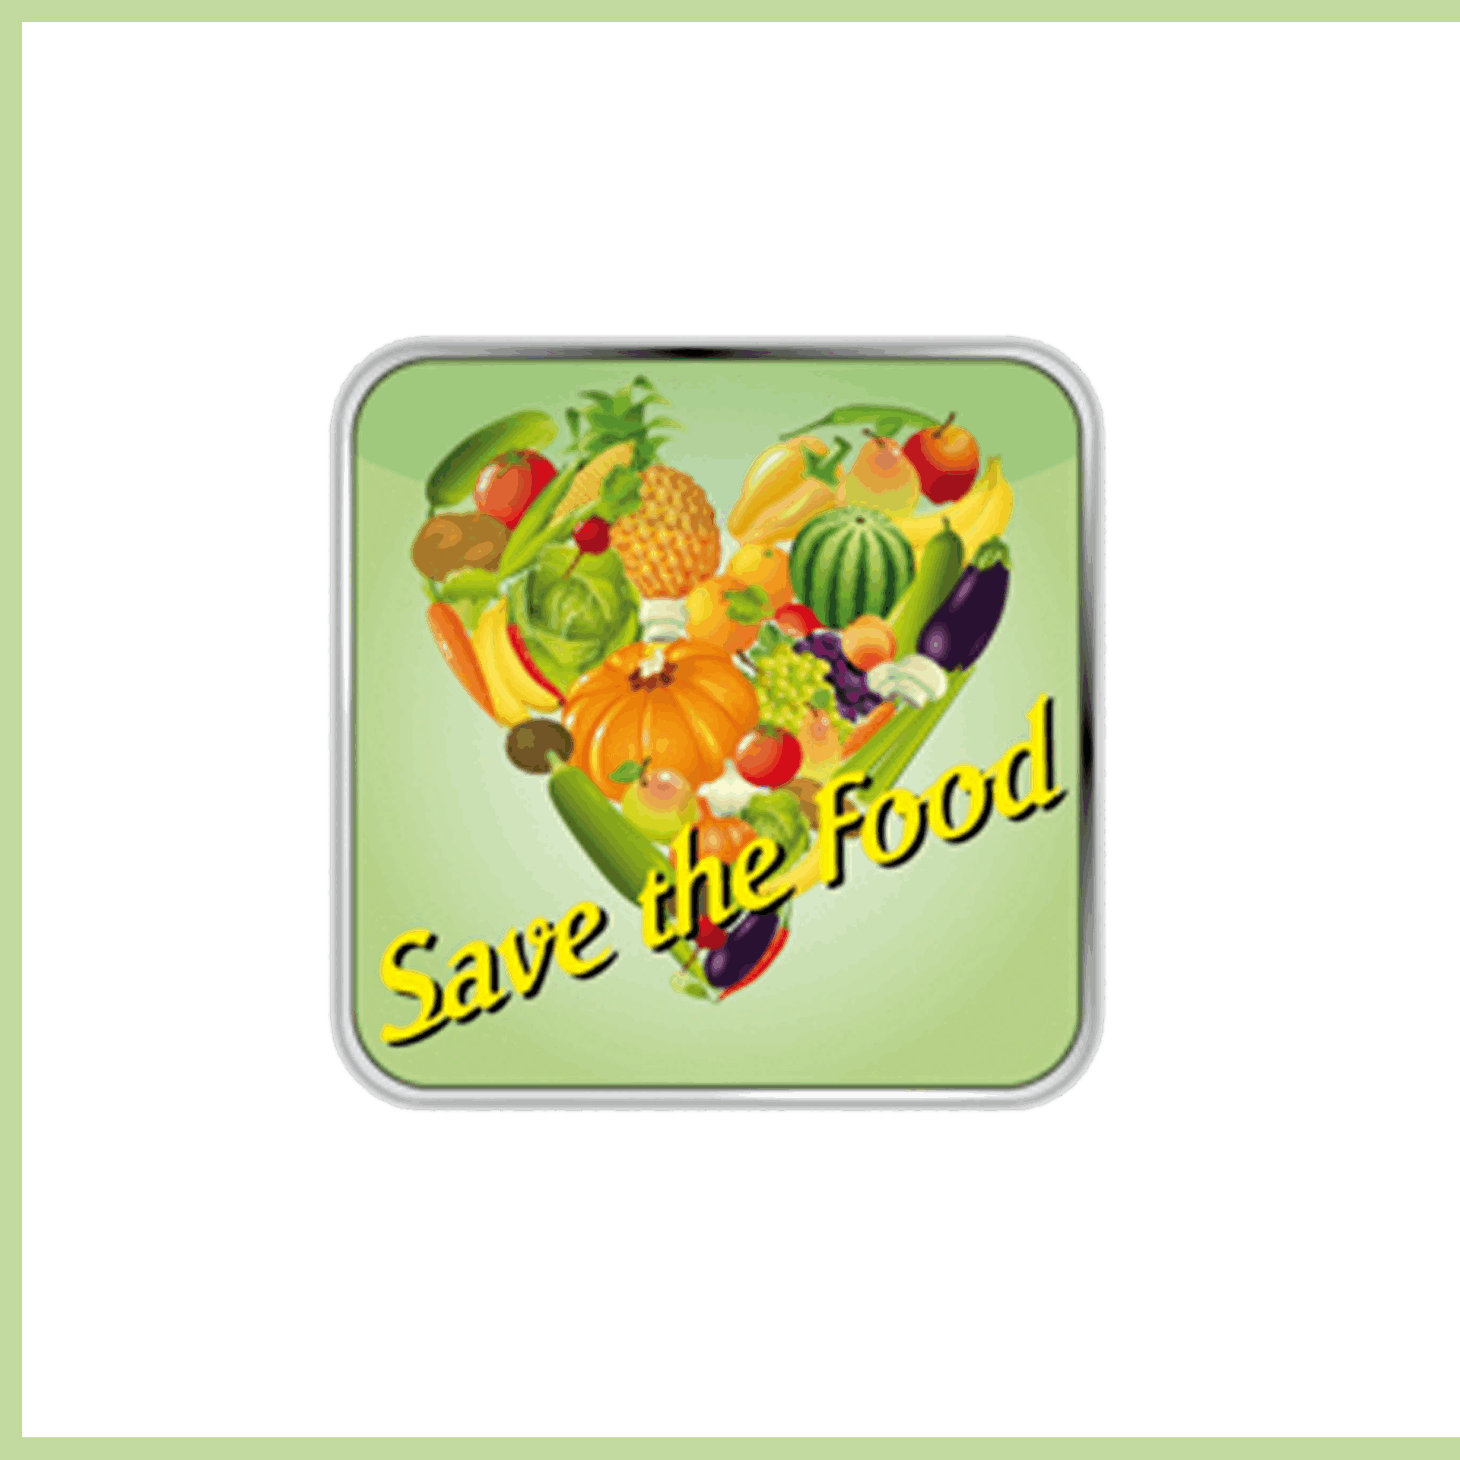 Save The Food